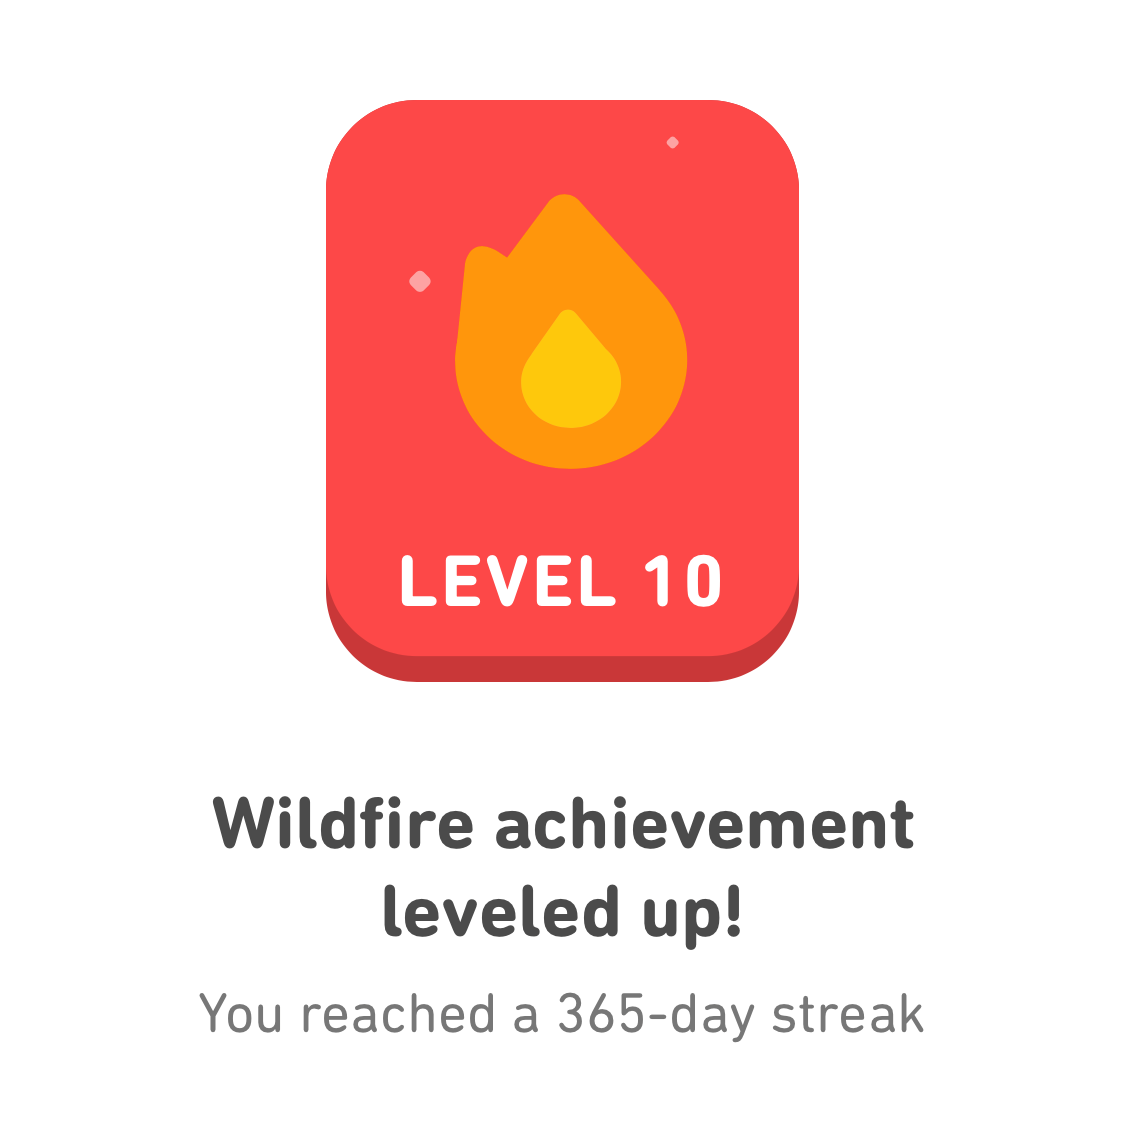 Achievement unlocked for a 365 day streak!